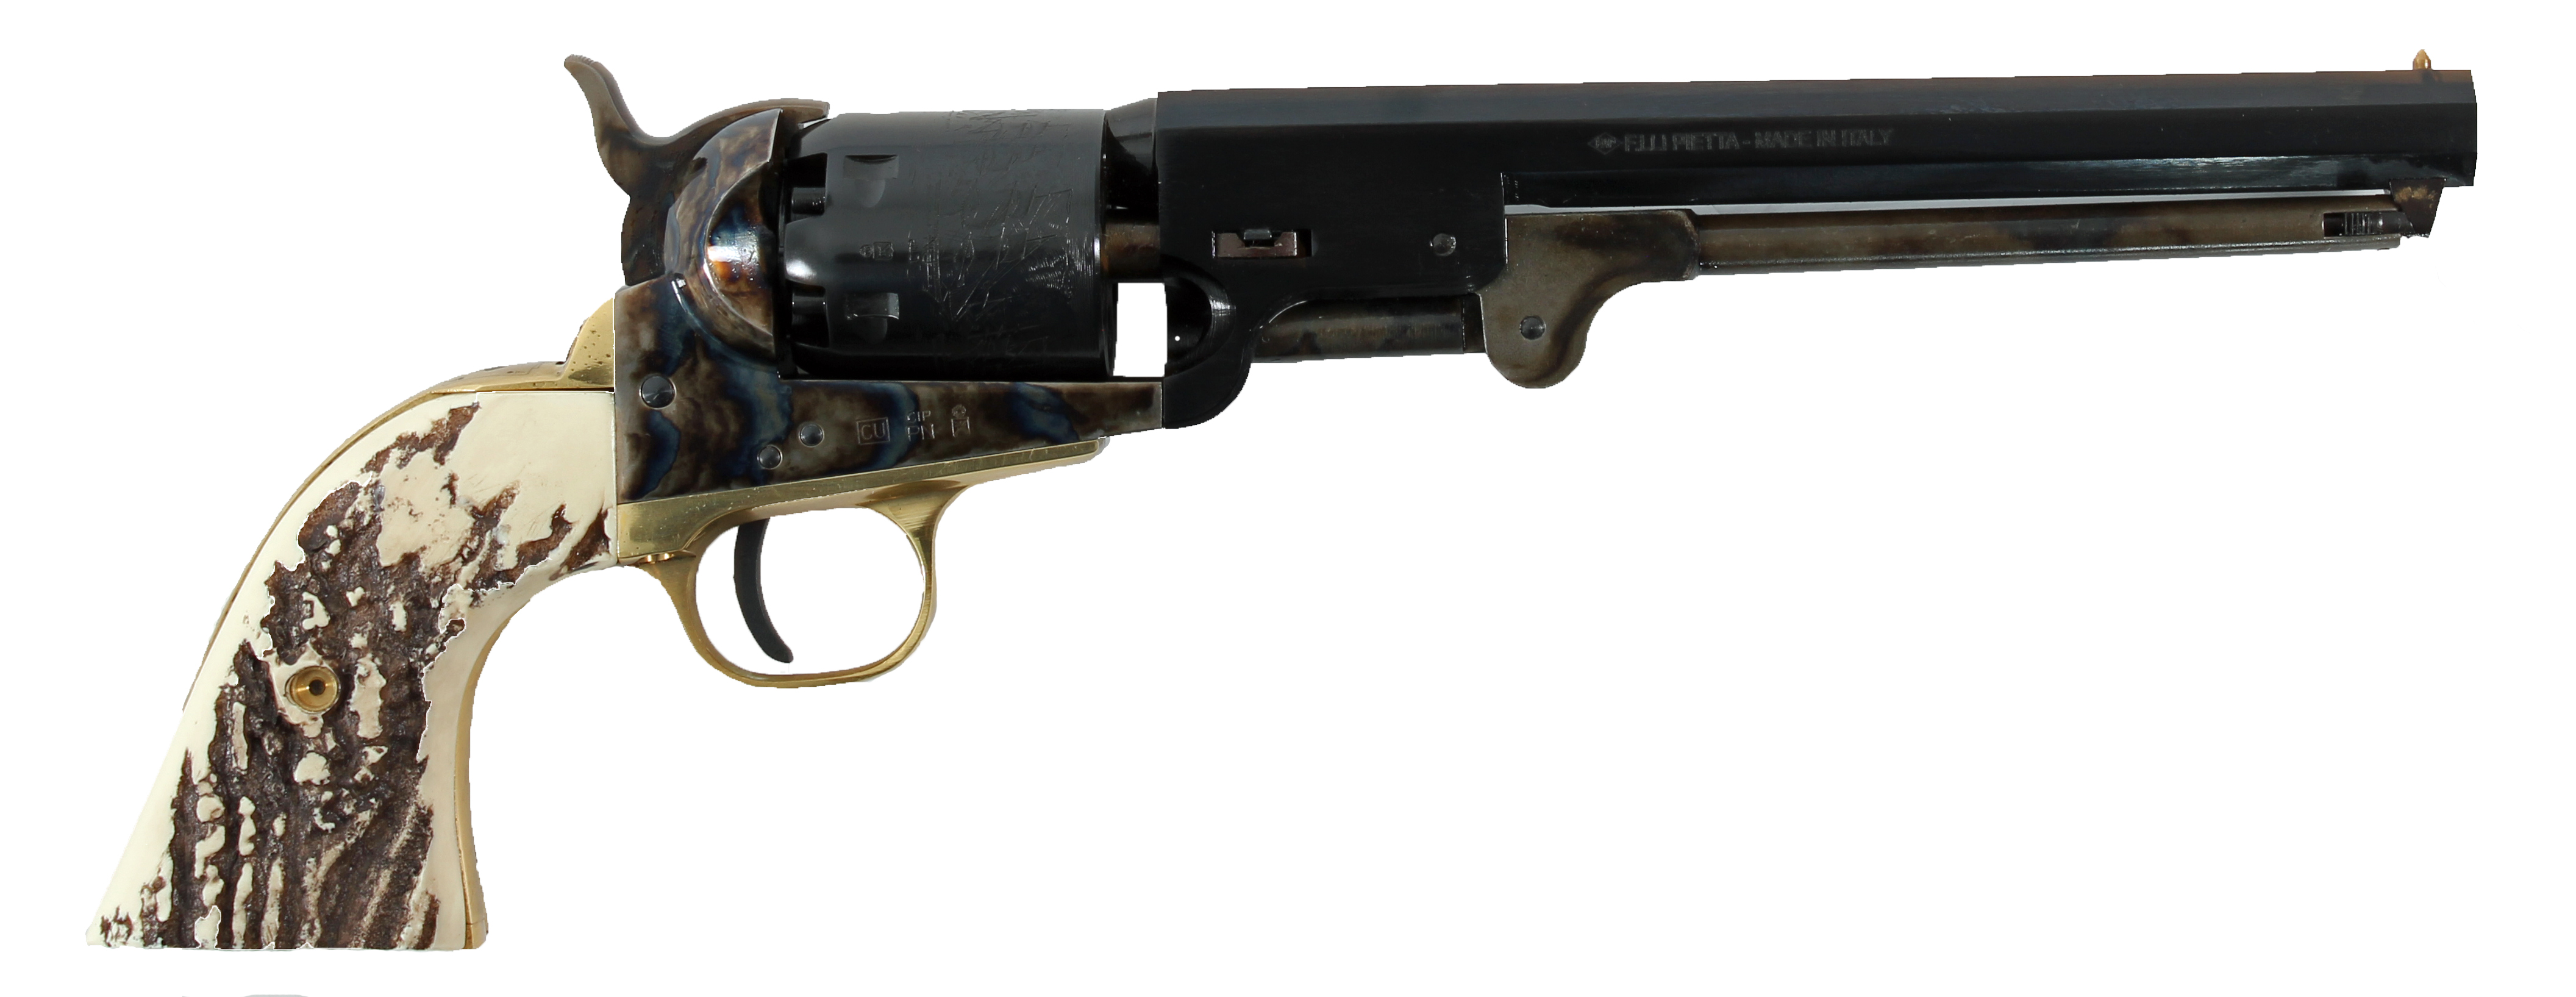 Remington 36 Cal Black Powder Revolver